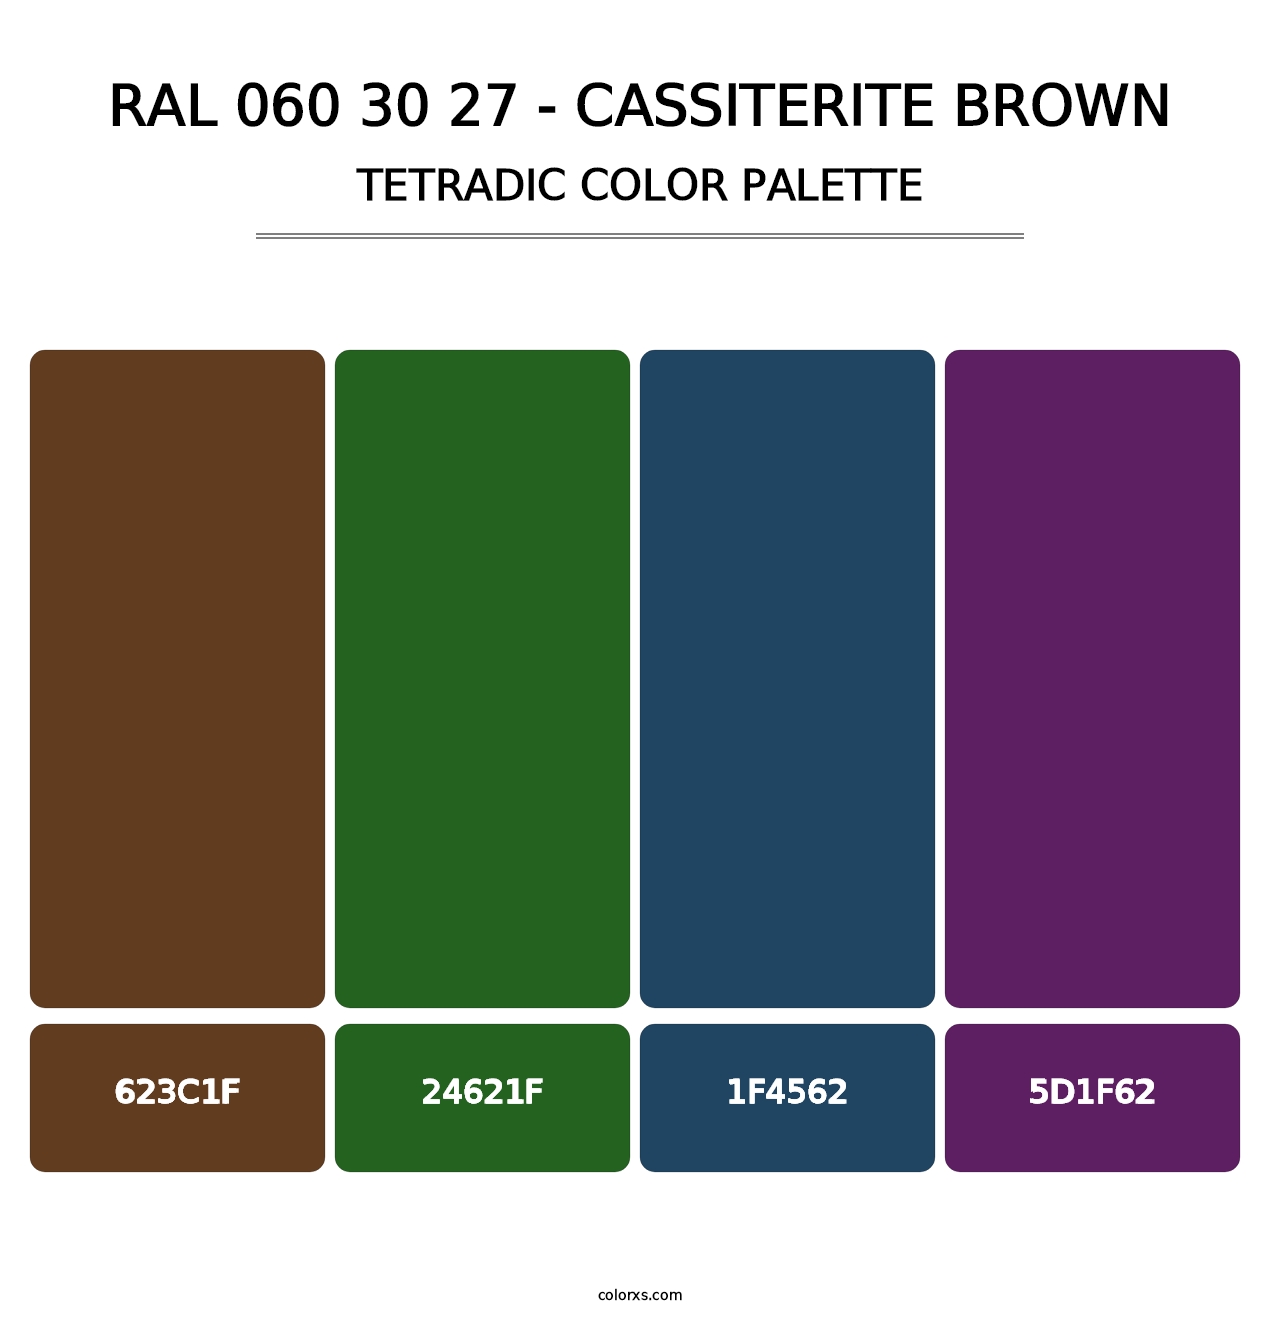 RAL 060 30 27 - Cassiterite Brown - Tetradic Color Palette